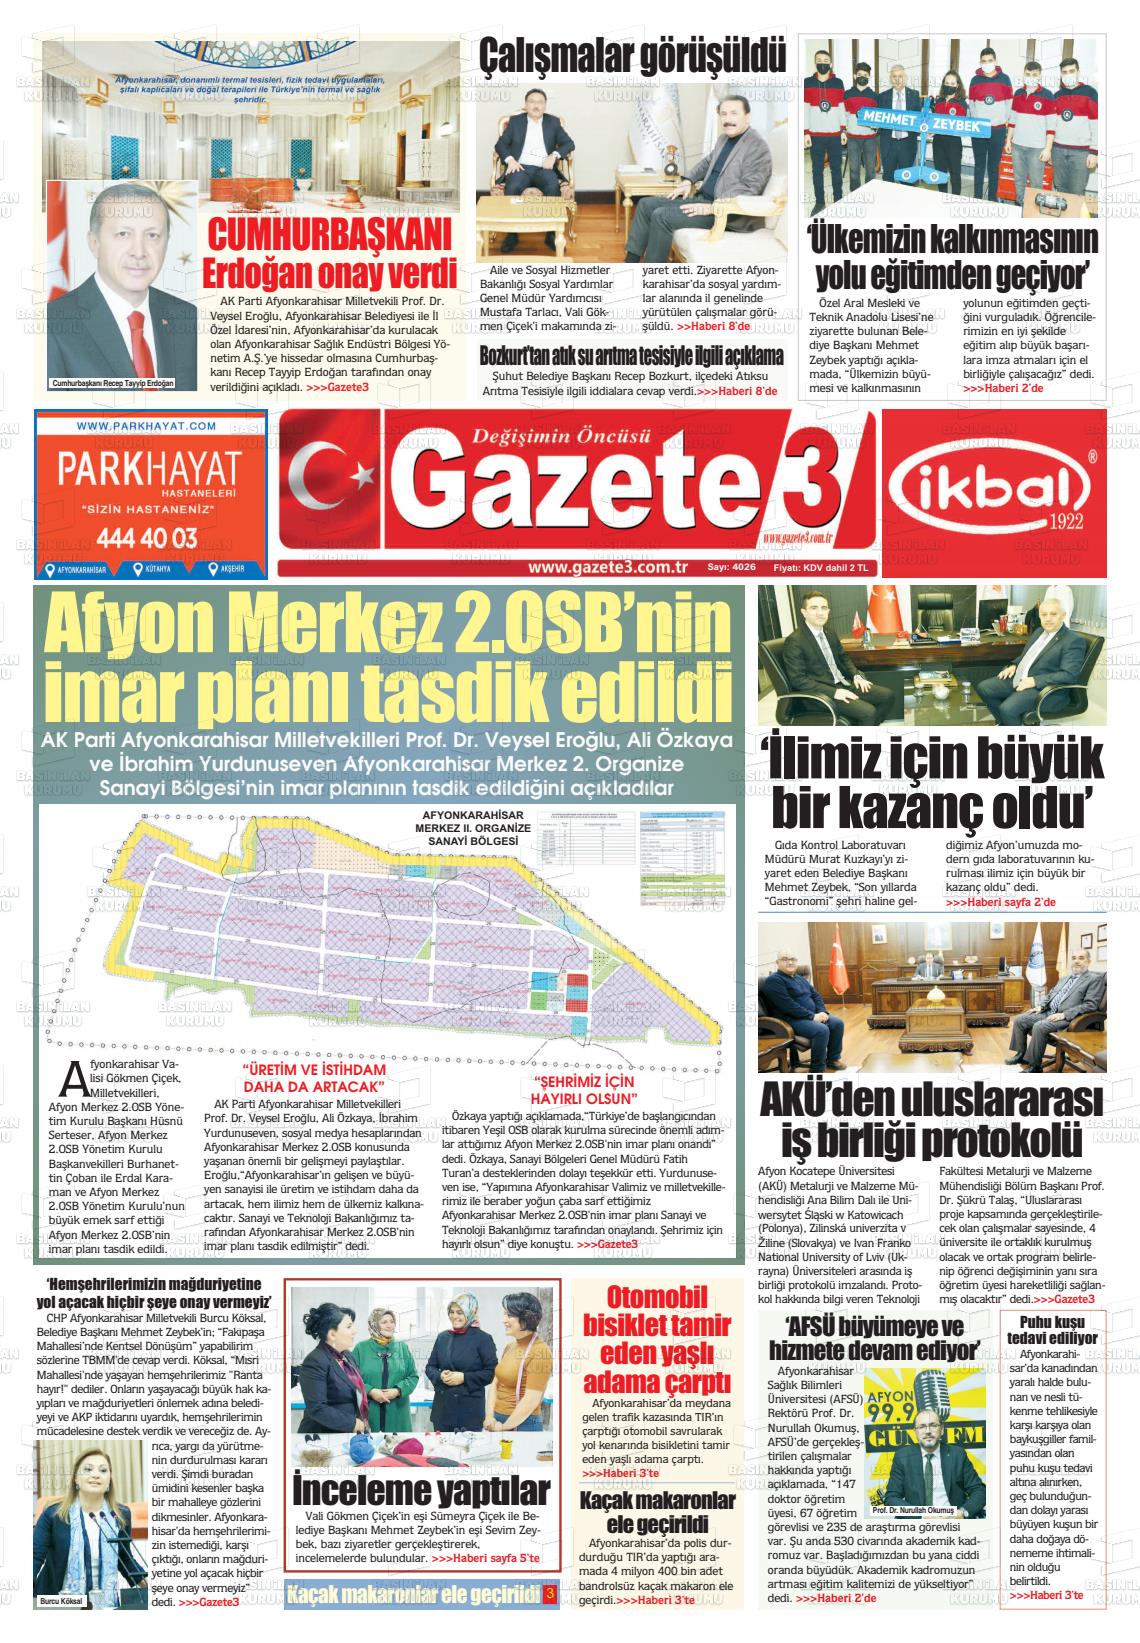 13 Ocak 2022 Gazete 3 Gazete Manşeti